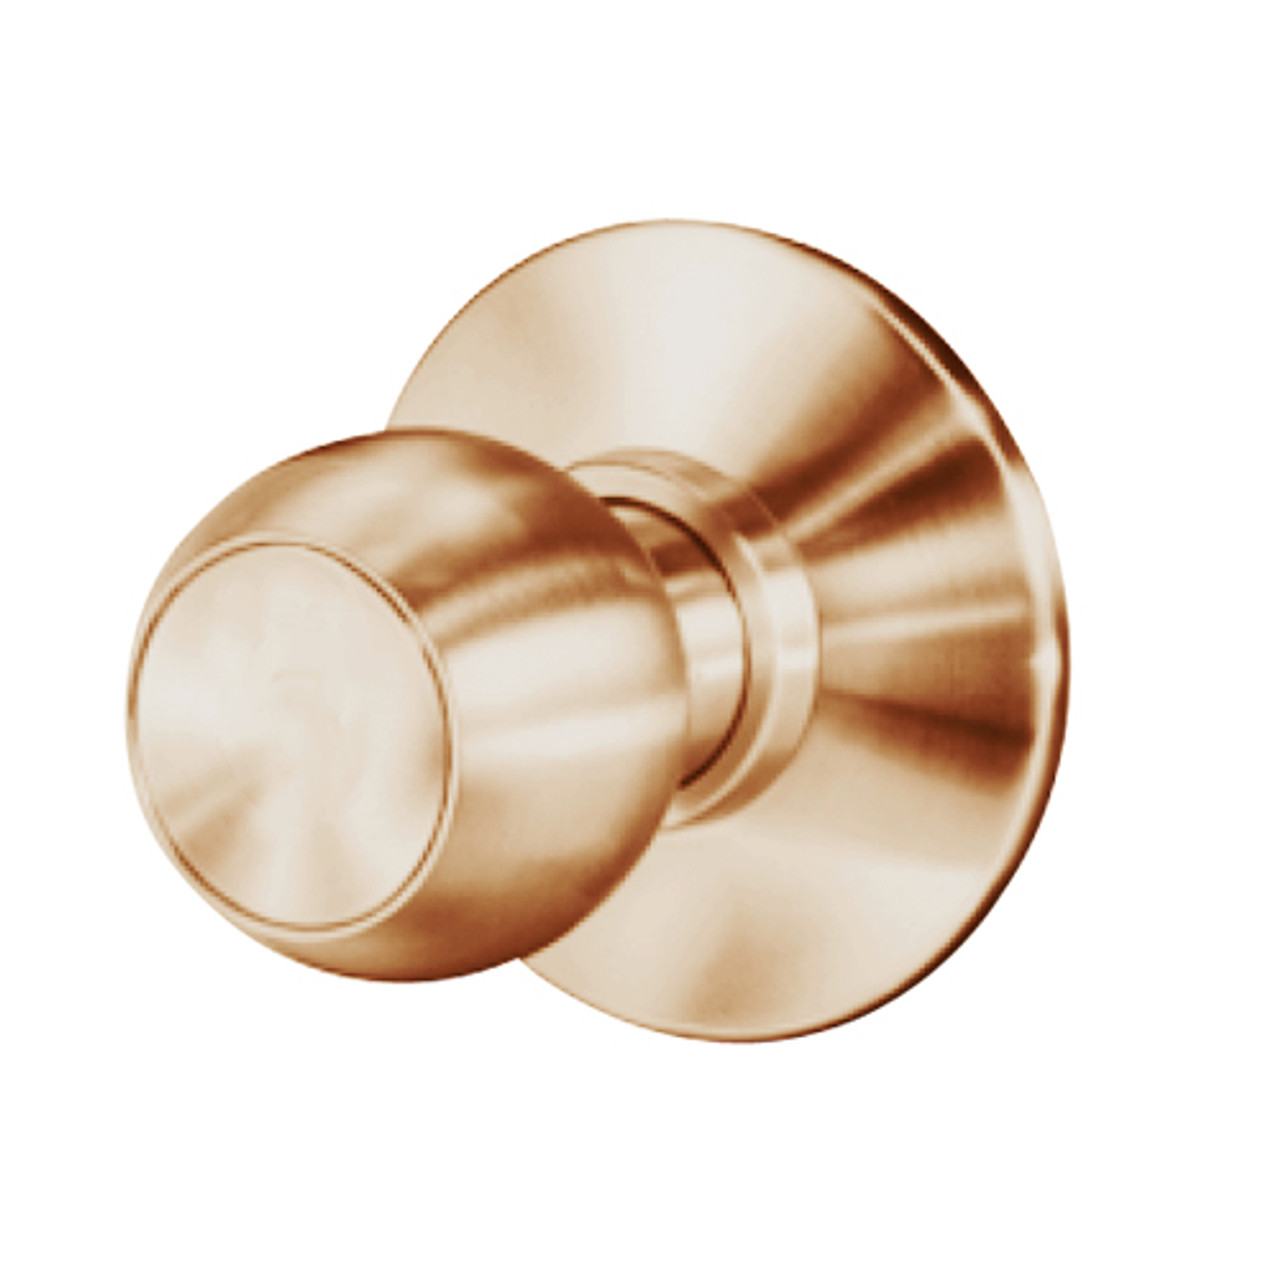 8K30Y4DS3612 Best 8K Series Exit Heavy Duty Cylindrical Knob Locks with Round Style in Satin Bronze